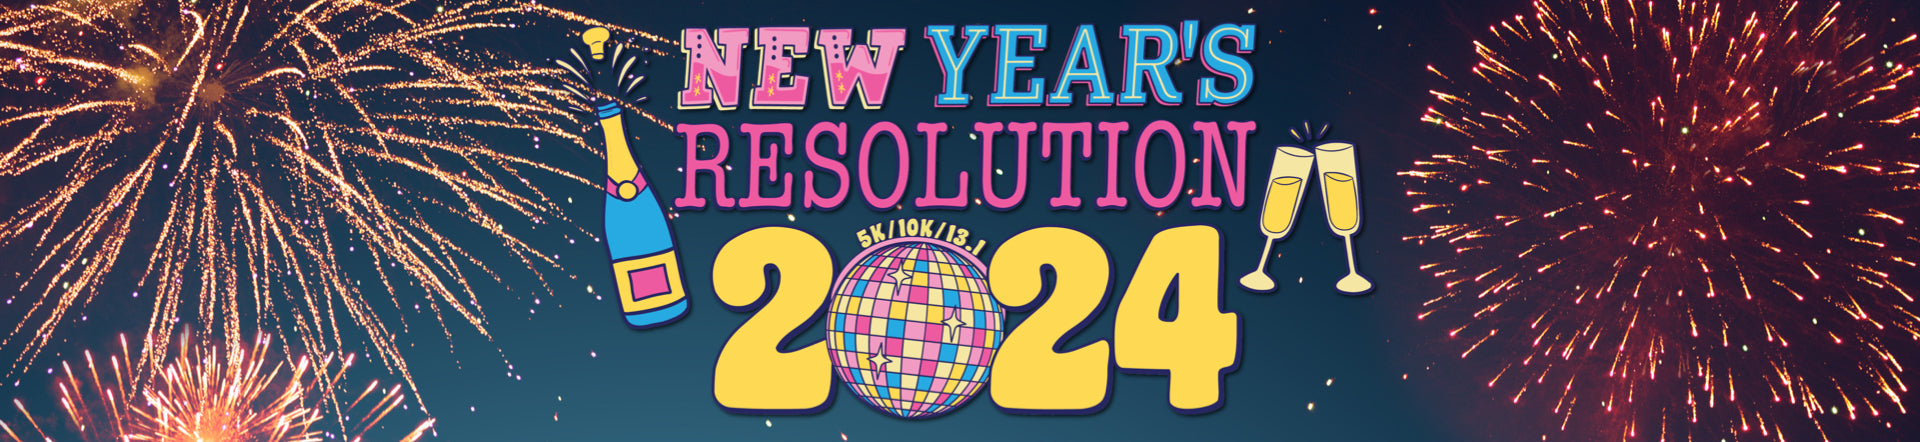 new years resolution 5k 10k 13.1